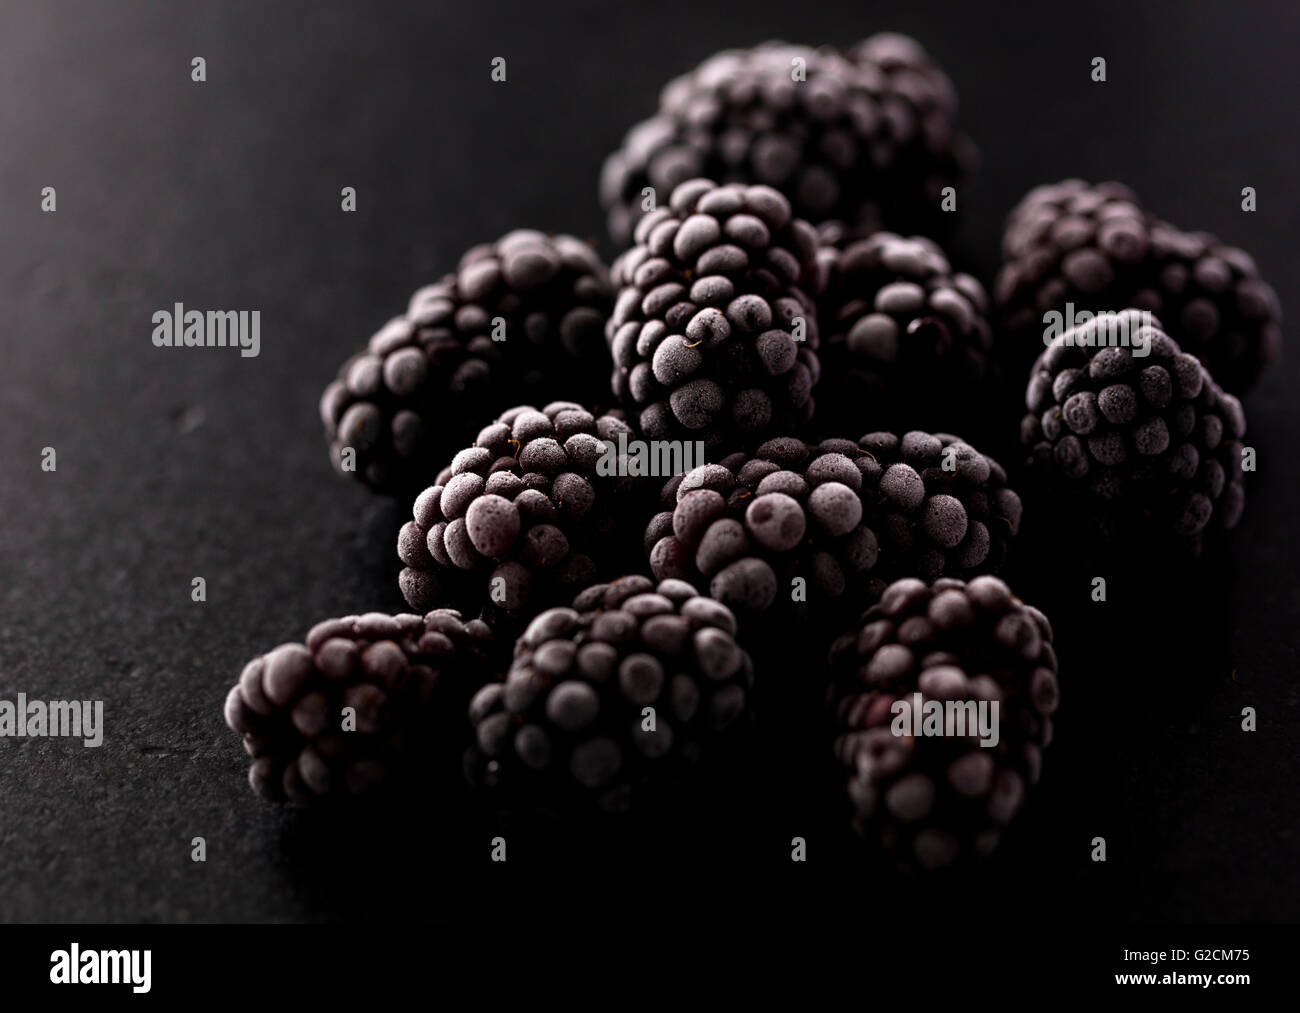 blackberries frozen on a black stone, macro photo showing a beautiful ice texture Stock Photo